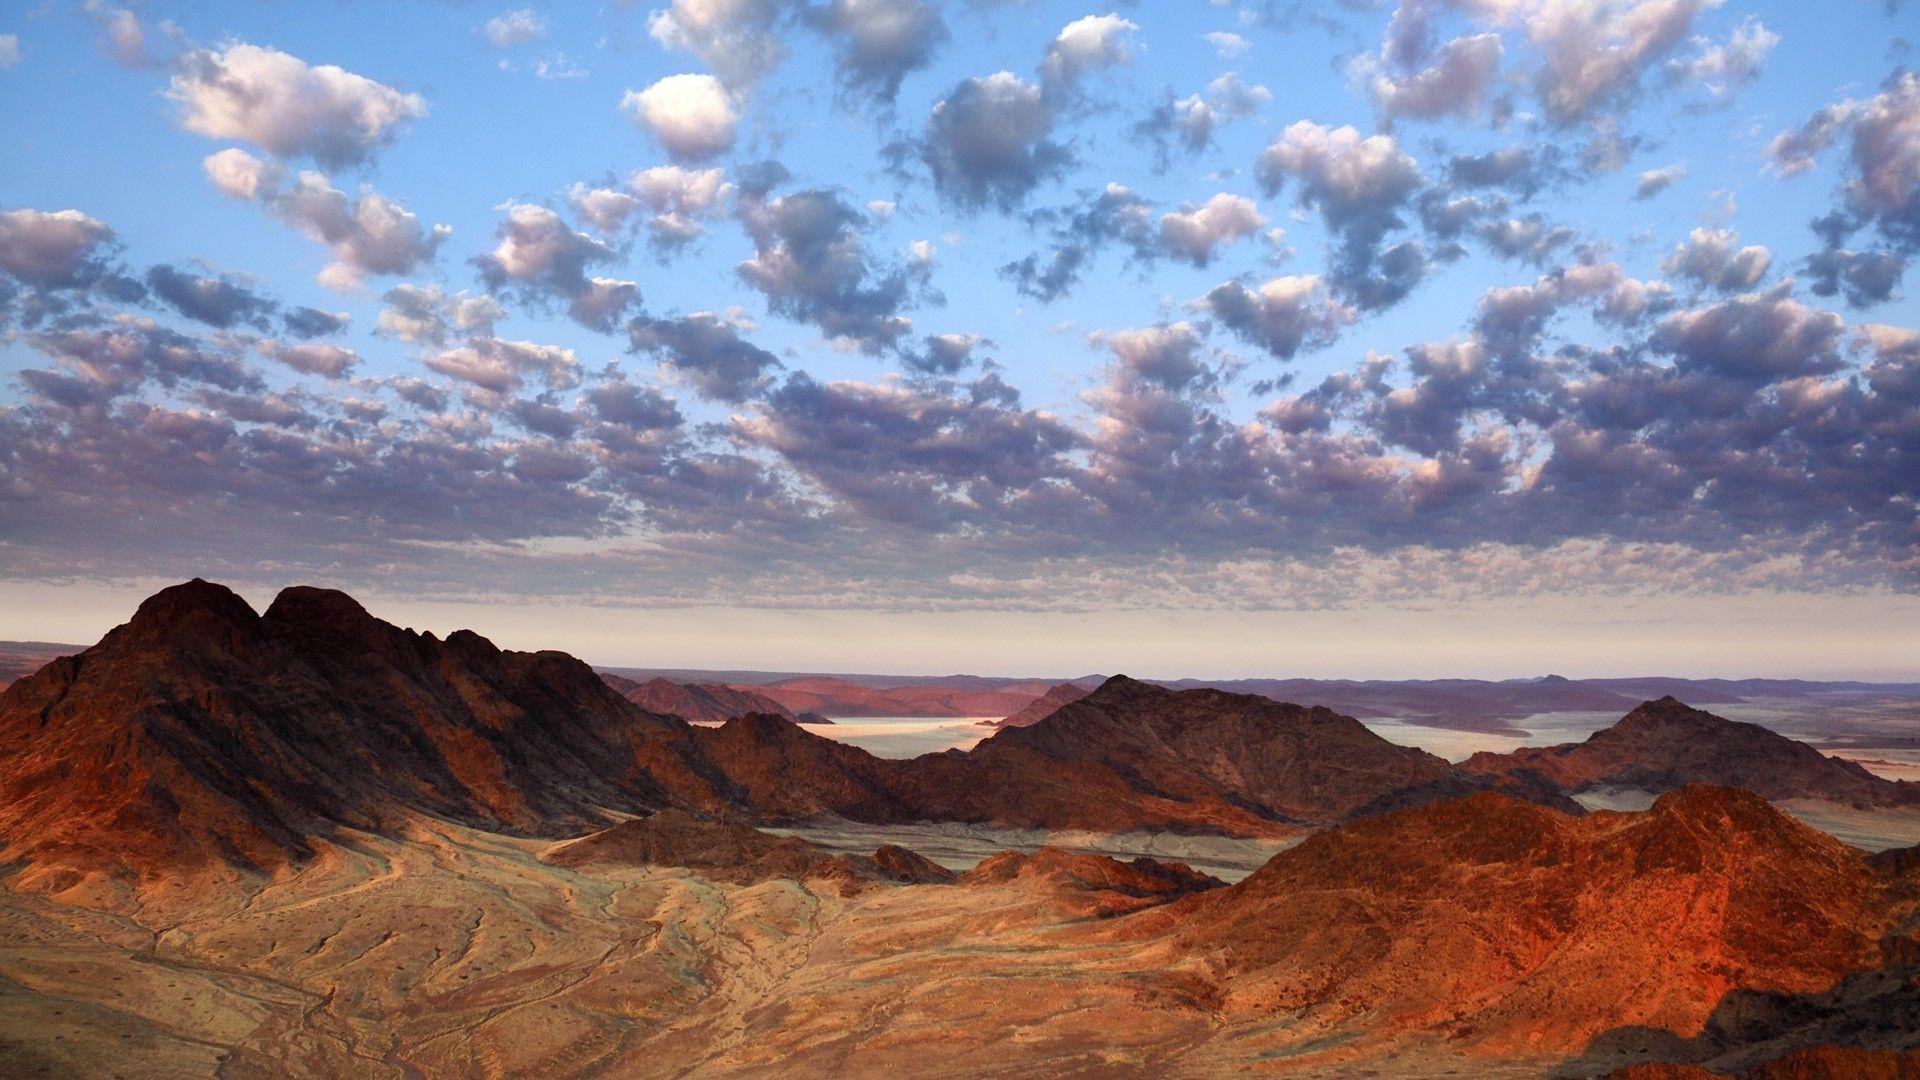 Desert view namibia africa wallpaper. PC